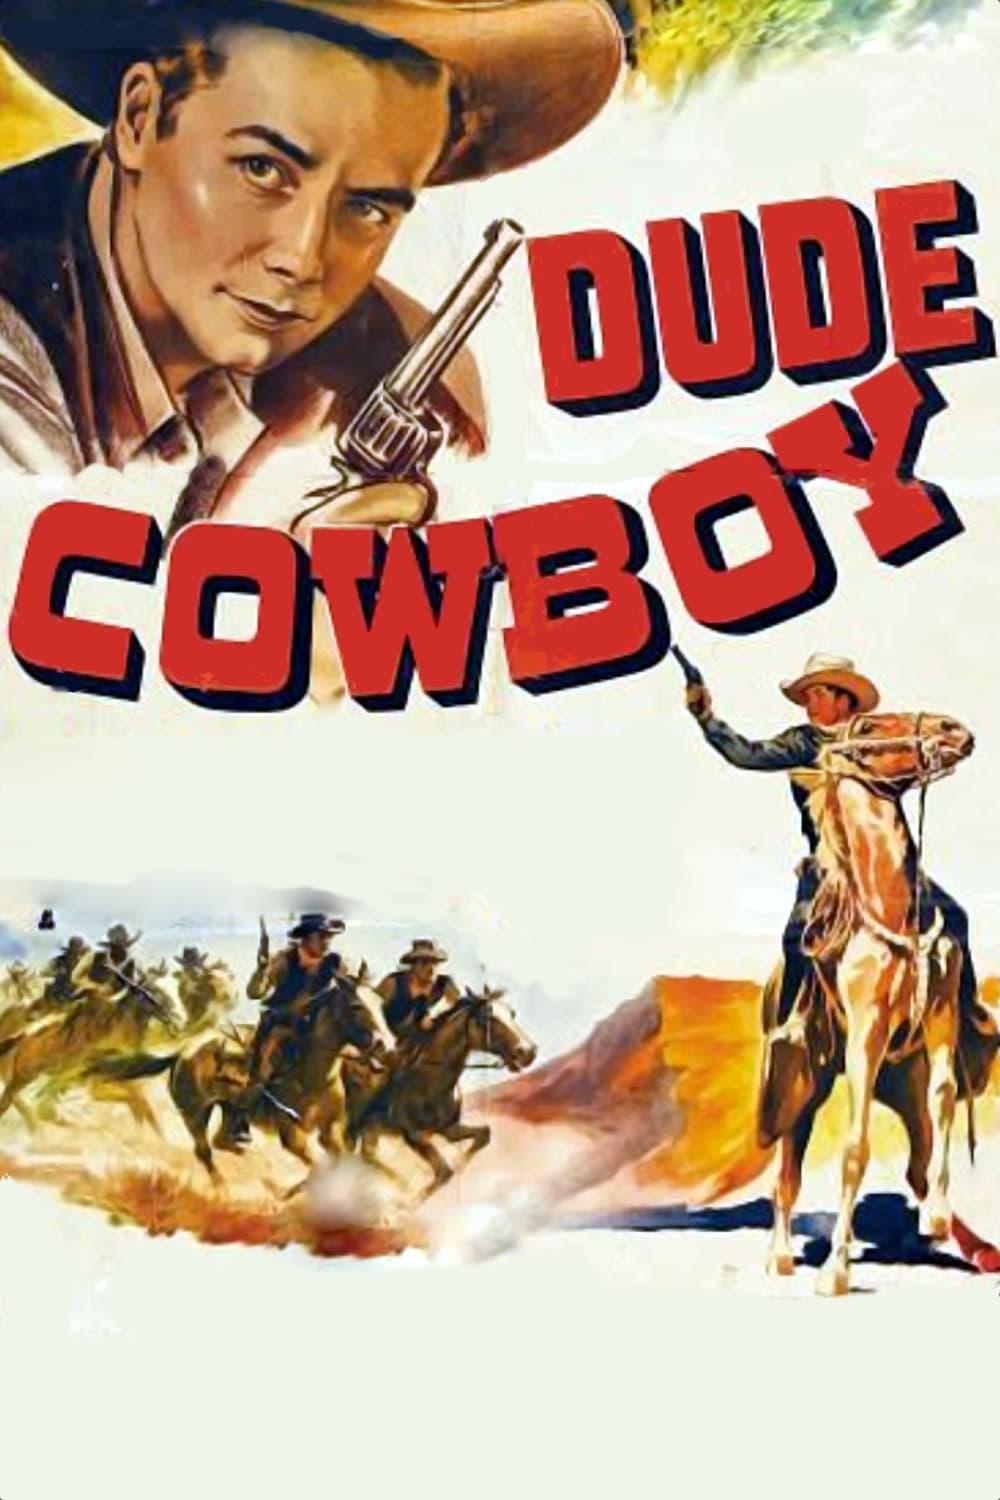 Dude Cowboy poster